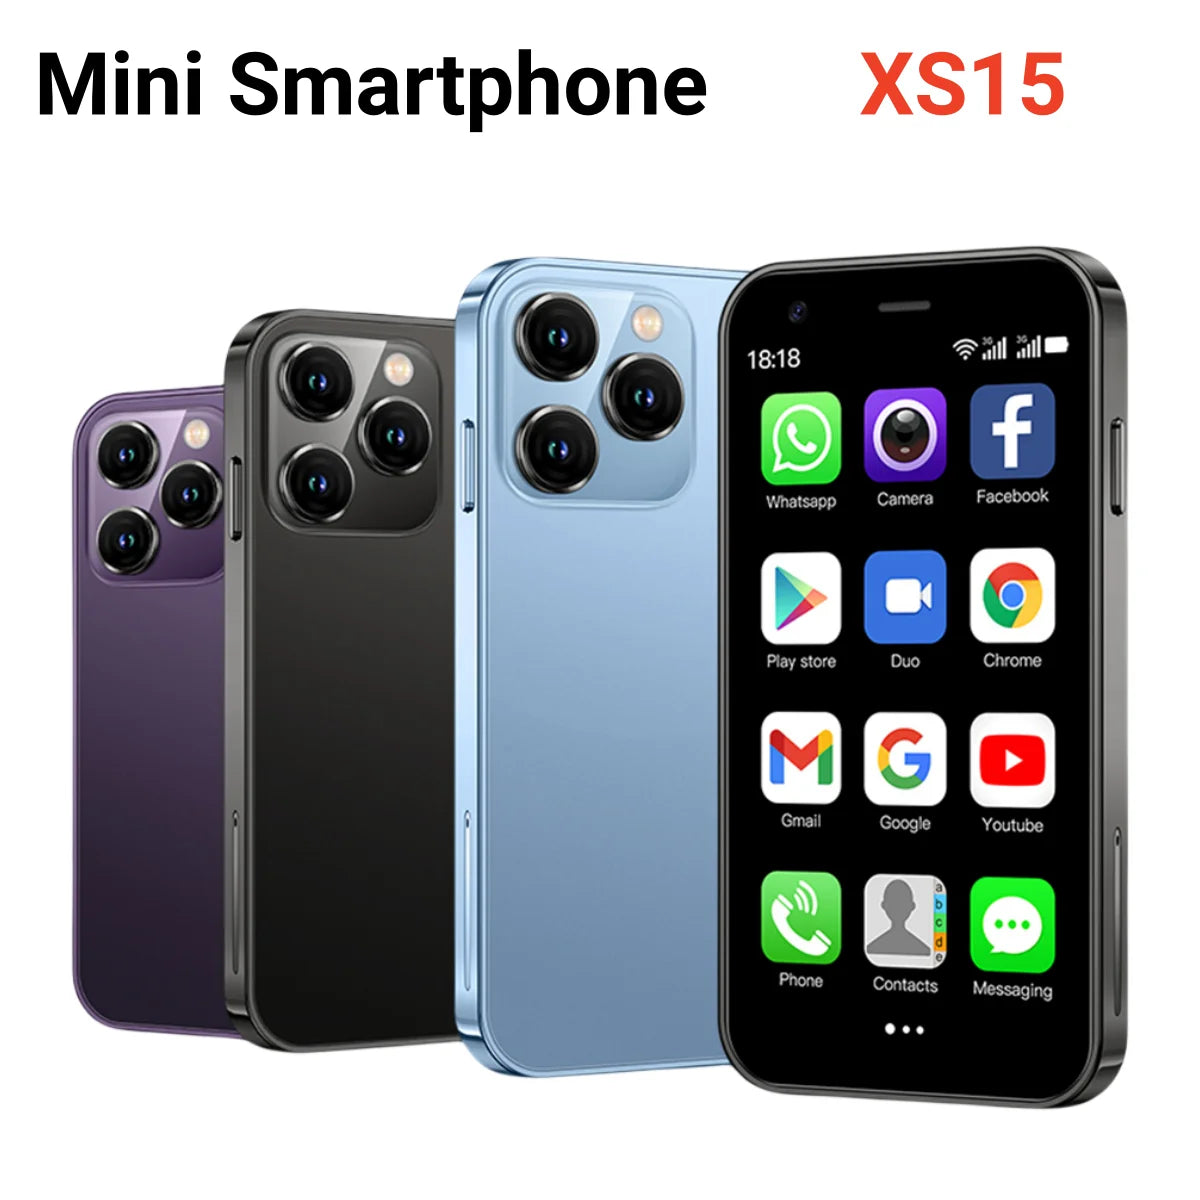 SOYES XS15 Mini Smartphone Android 3.0 inch Display 2GB RAM 16GB ROM Dual SIM Google Play Store 3G Original Small Mobile Phones